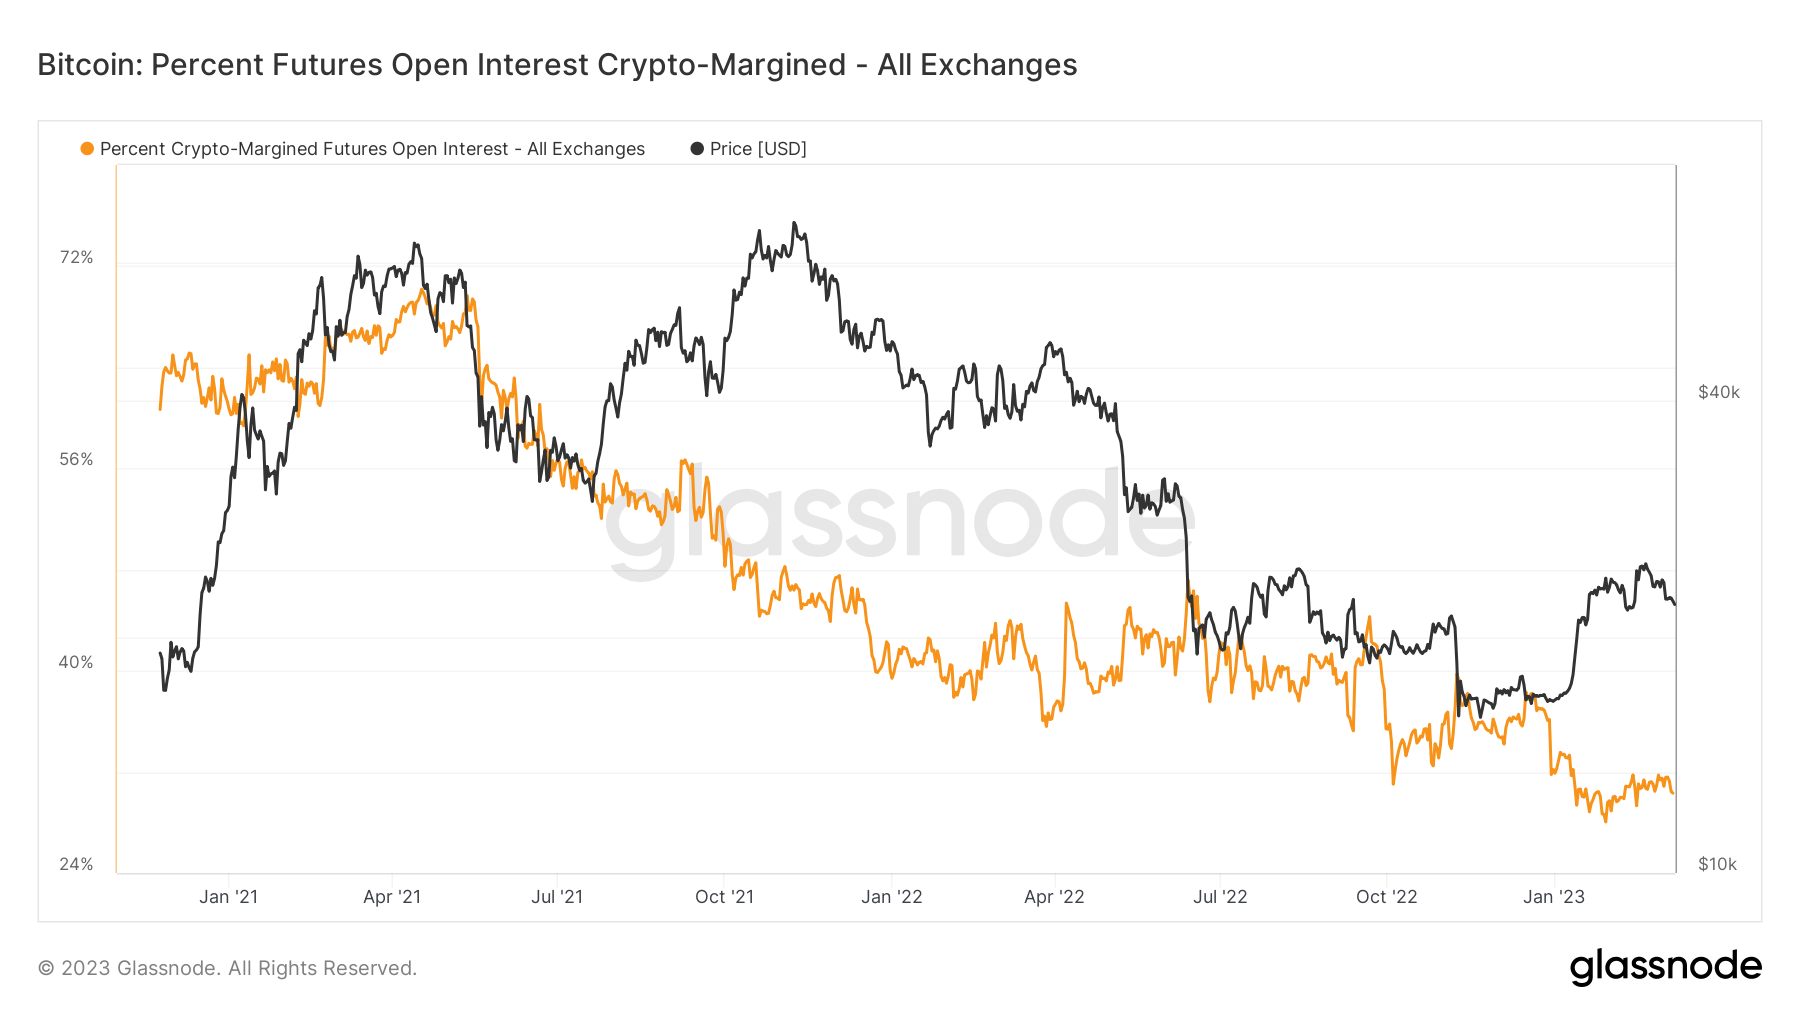 Futures Open Interest Crypto Margined: (Source: Glassnode)